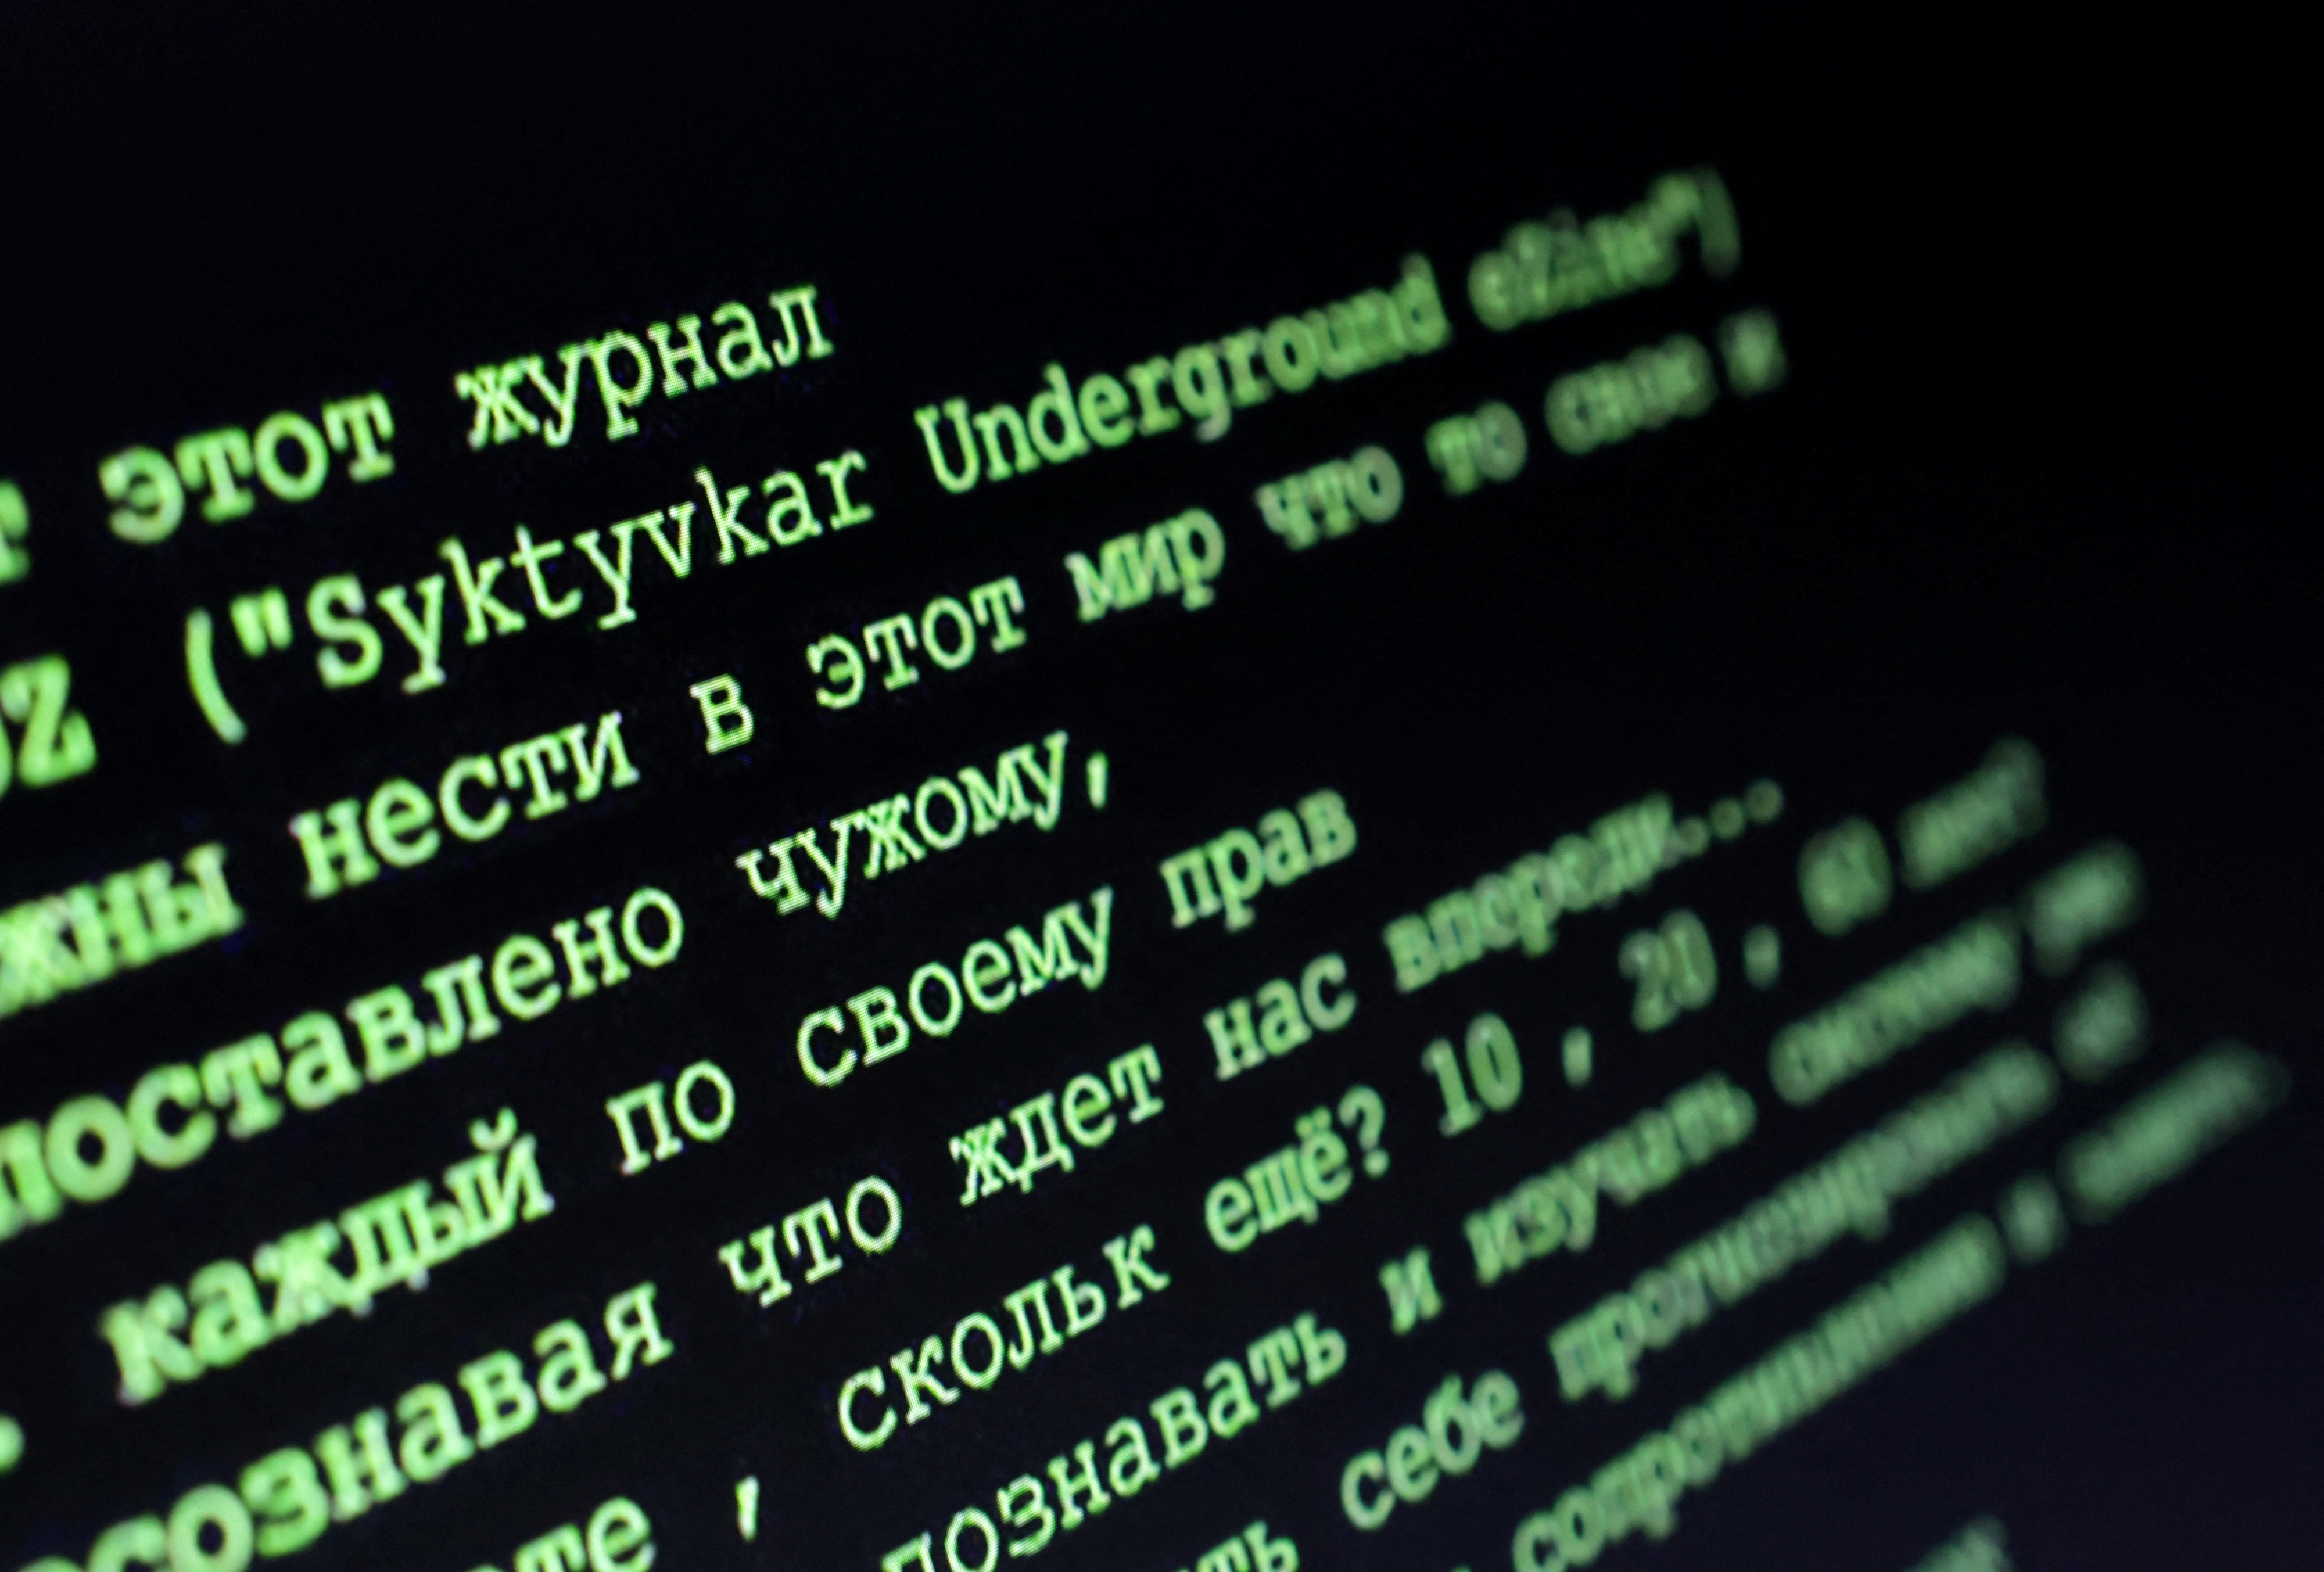 Illustration shows Russian hacking underground newsletter